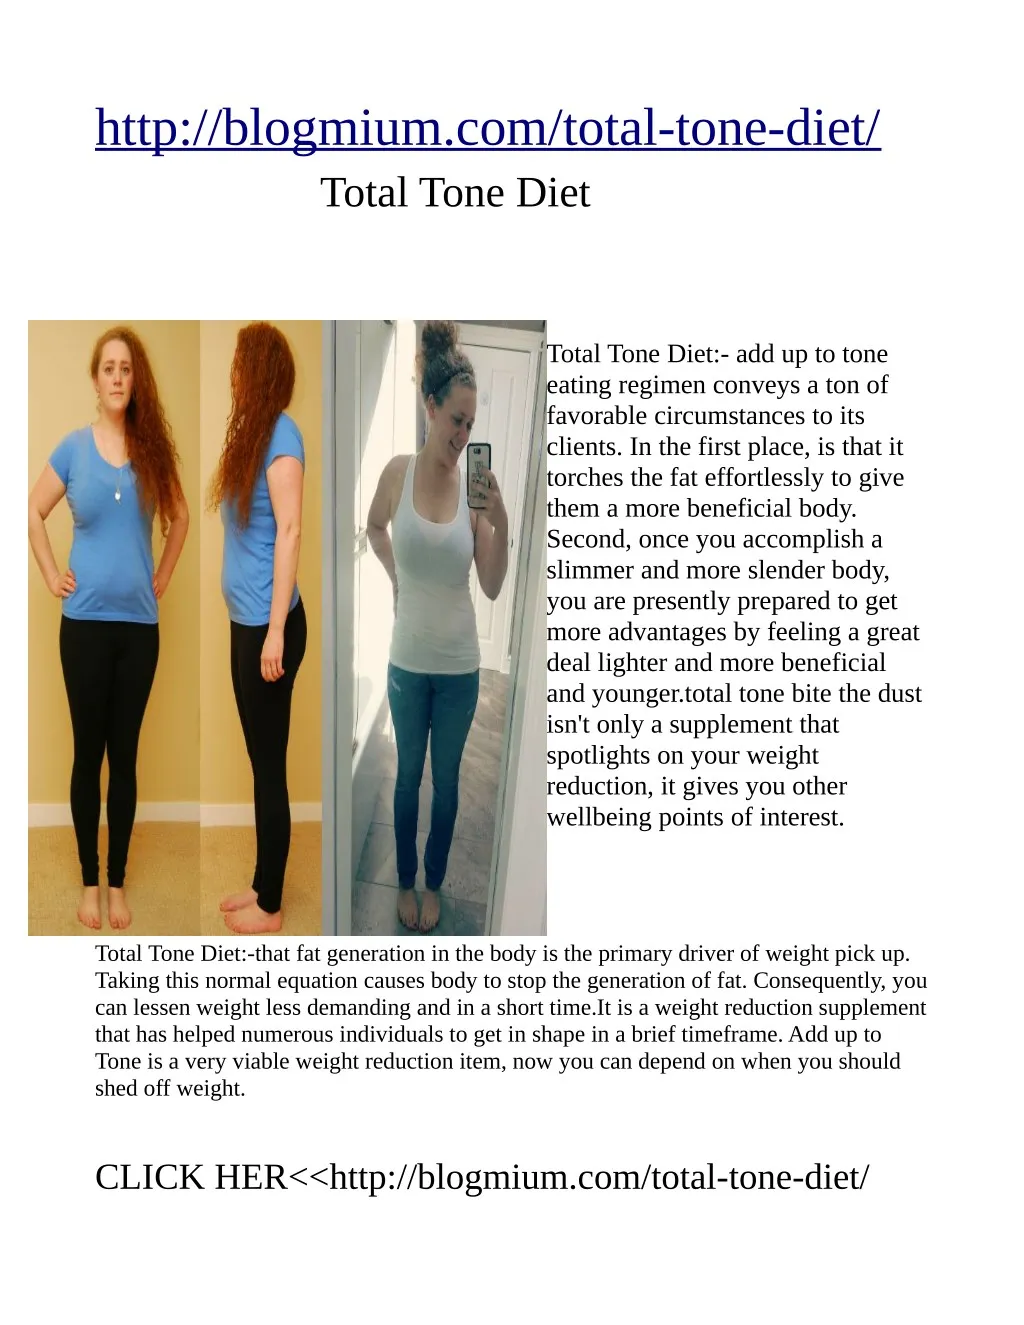 http blogmium com total tone diet total tone diet